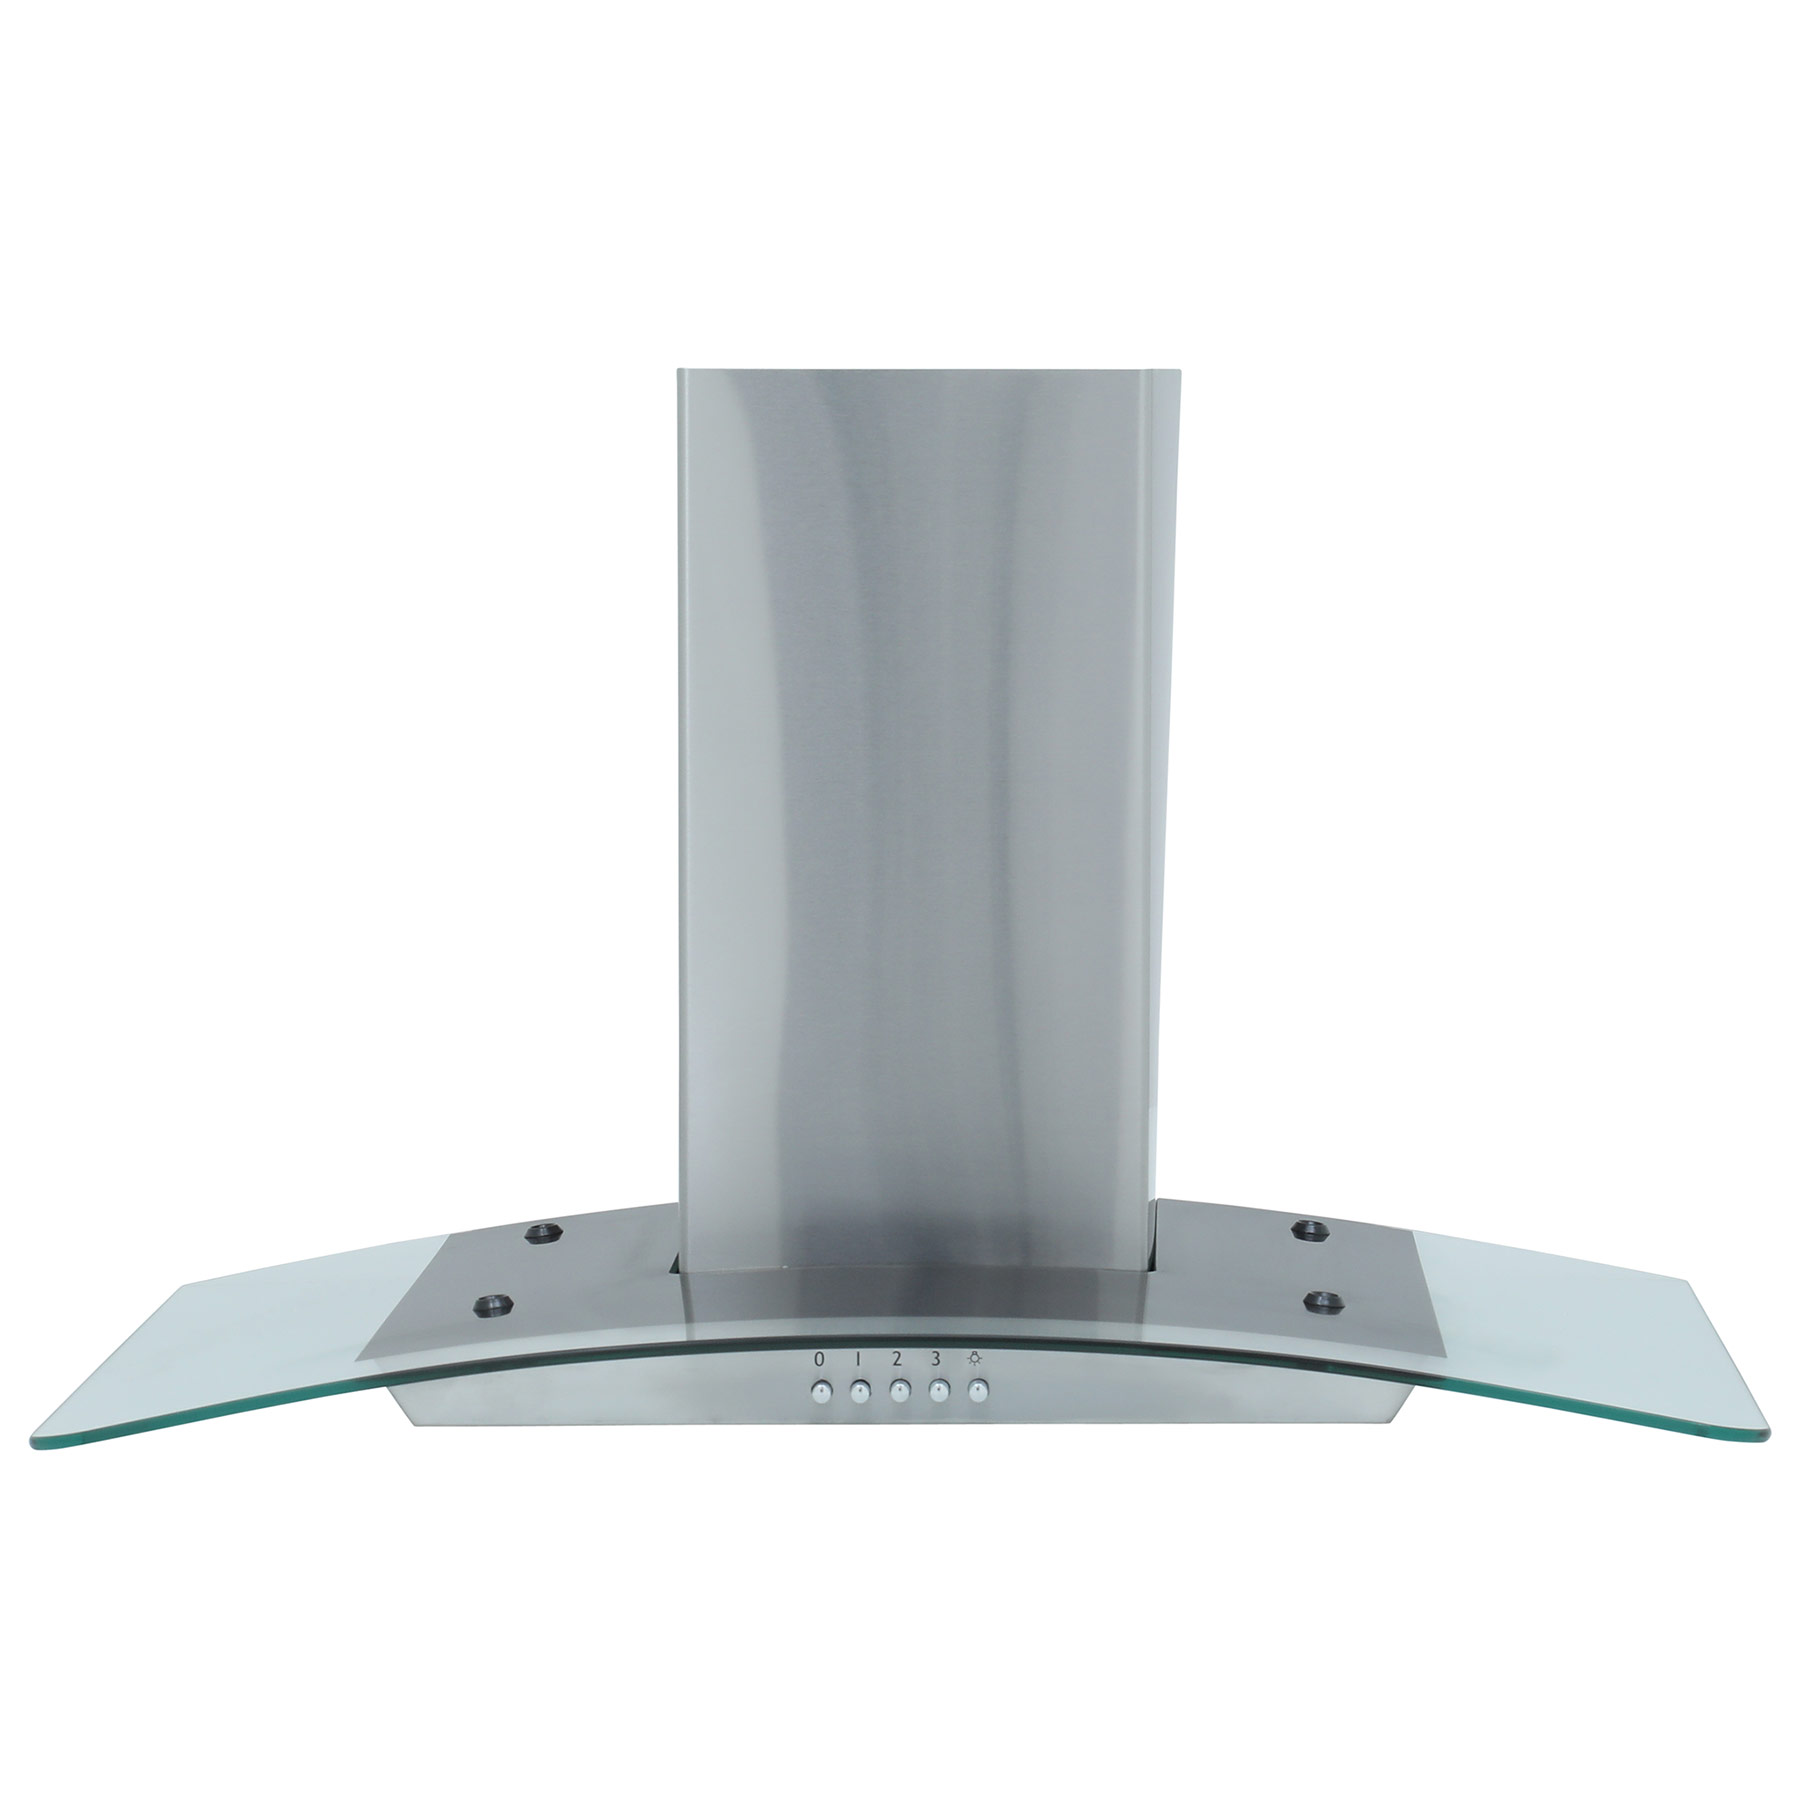 Image of Montpellier MHG700X 70cm Curved Glass Hood in St Steel 3 Speed Fan